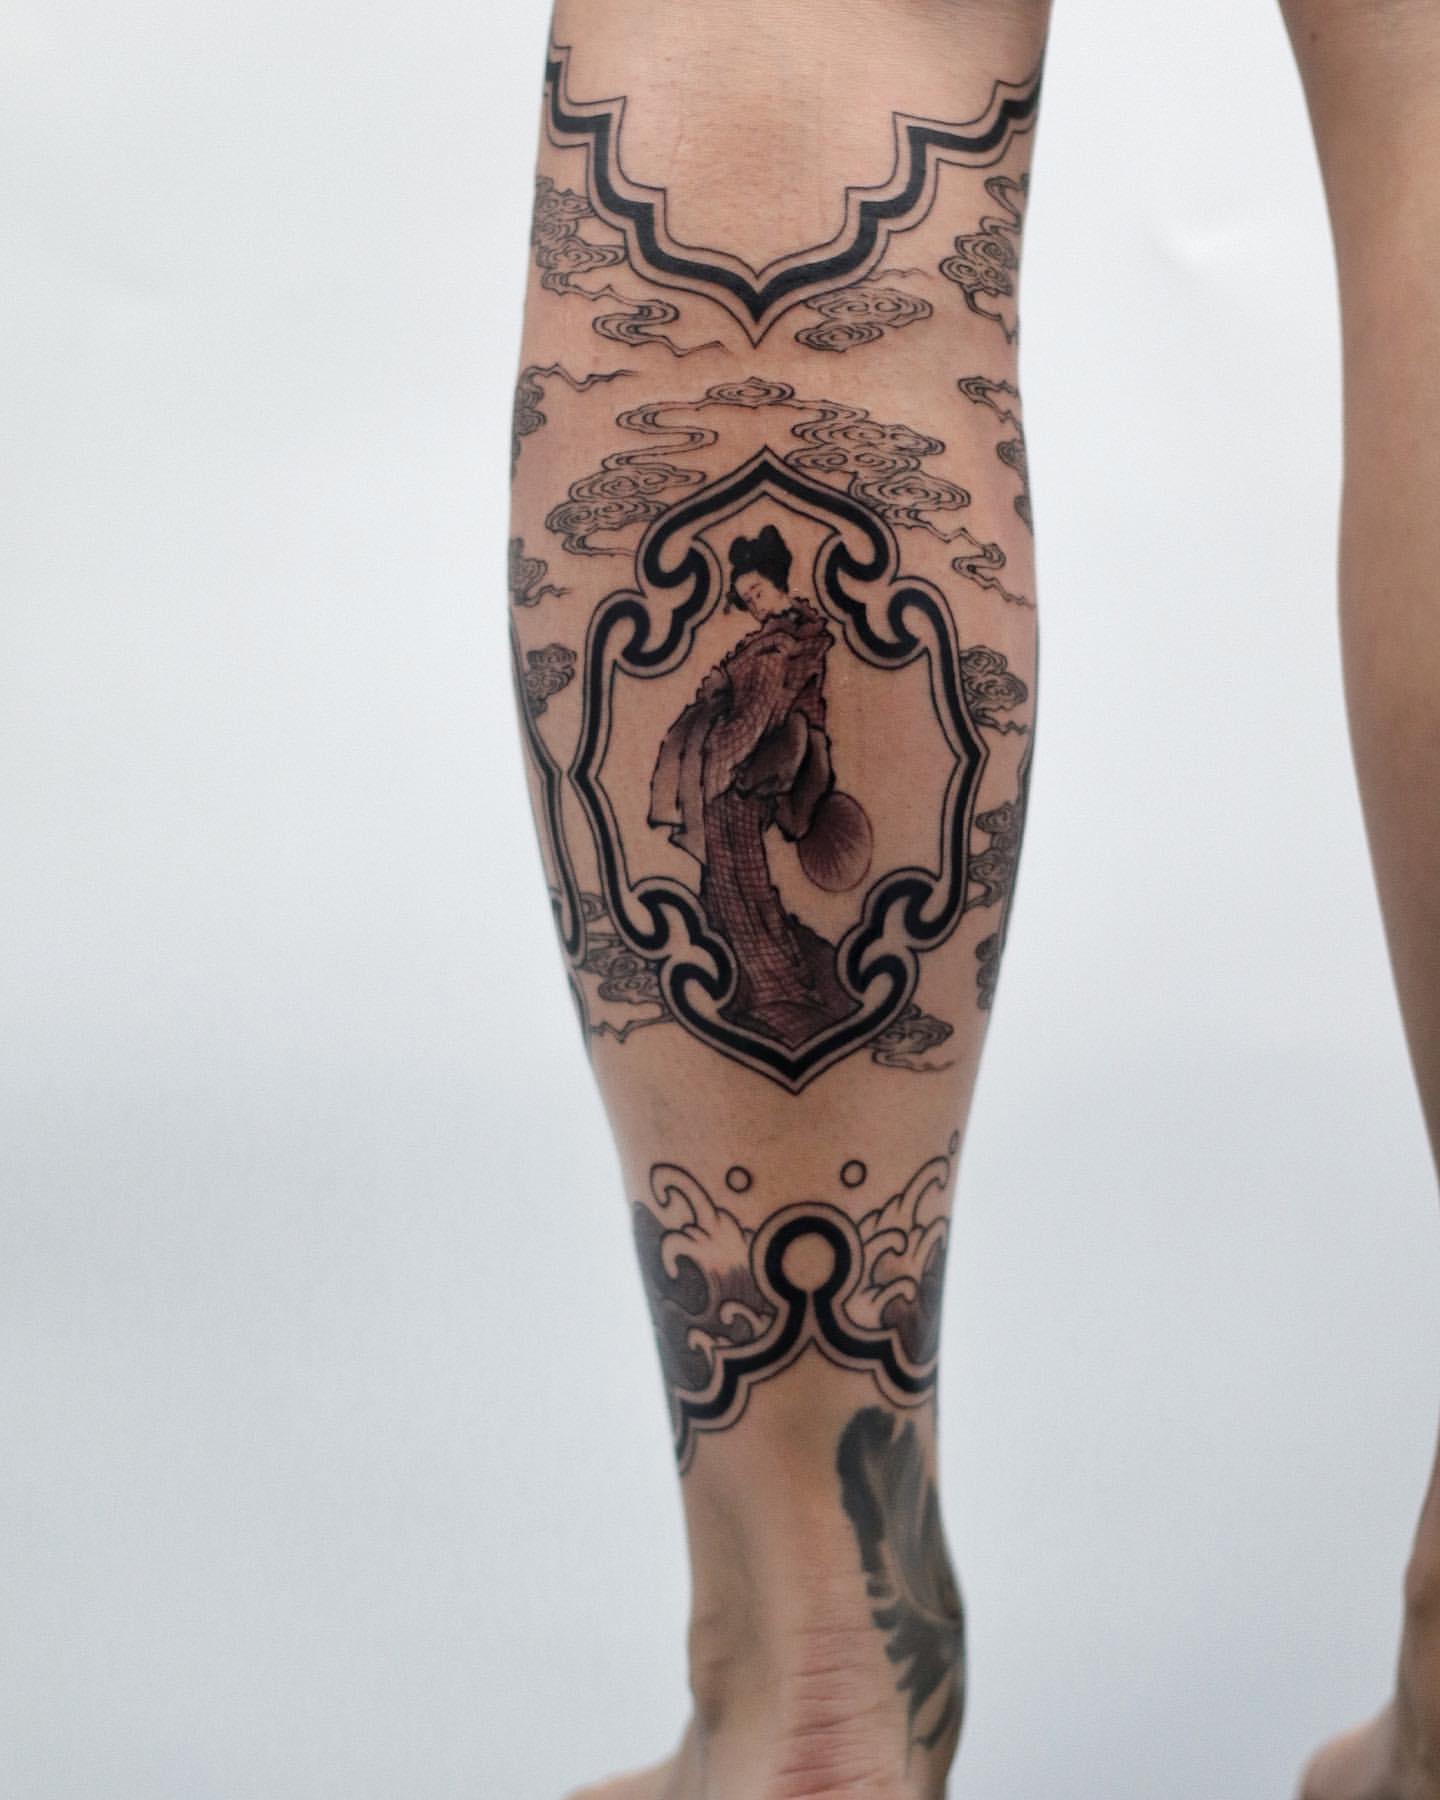 Filler/ back of calf tattoo : r/TattooDesigns